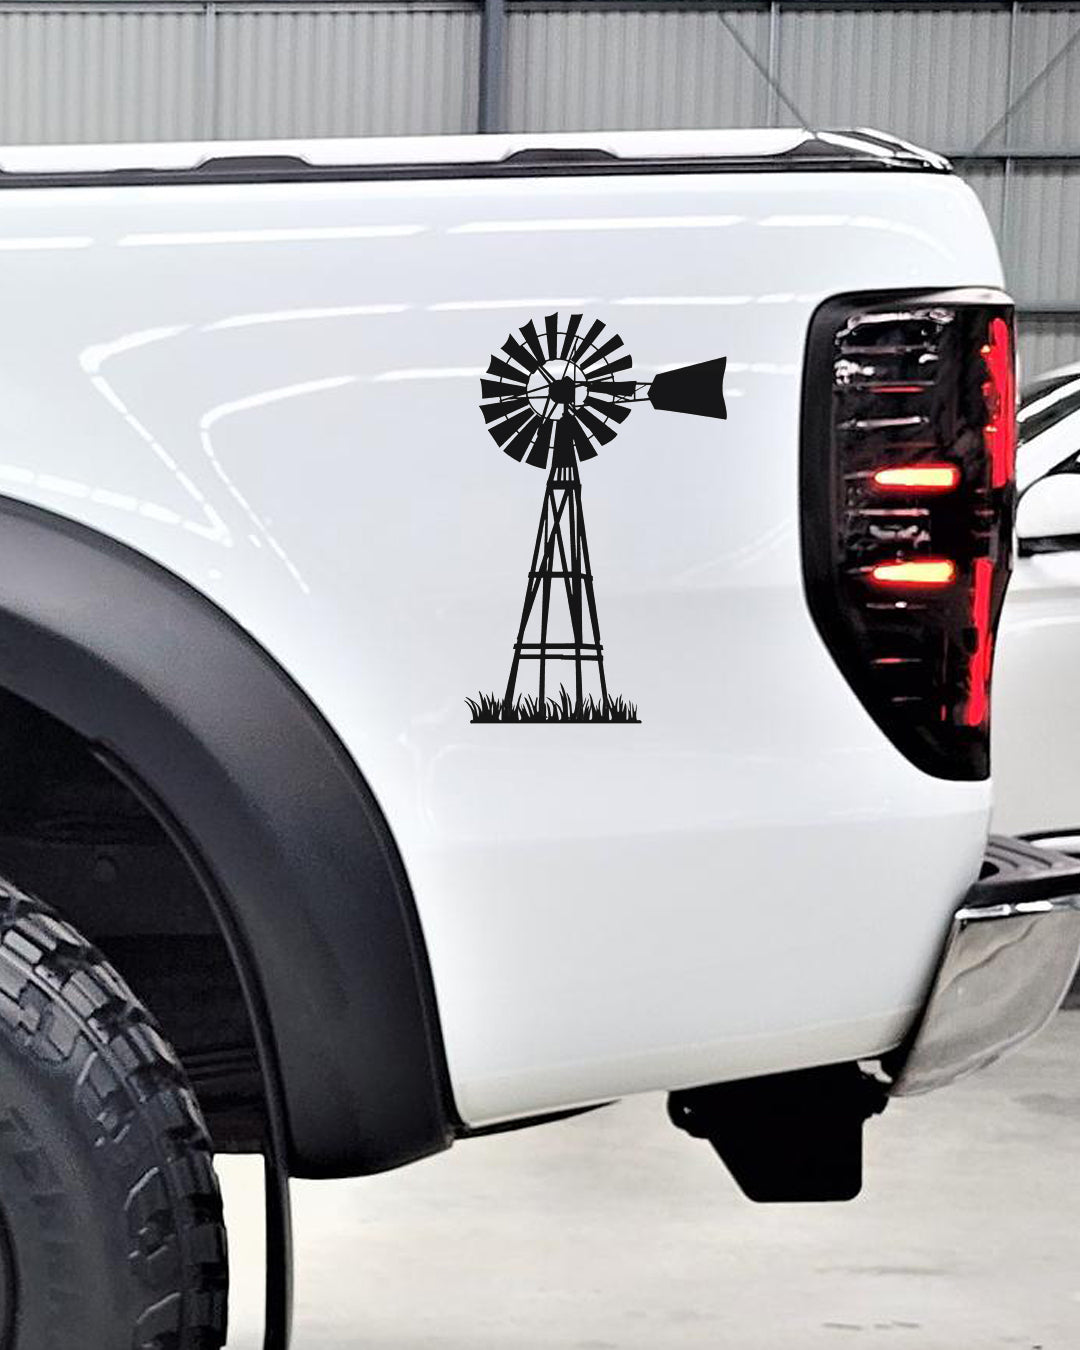 Windpomp Windmill Boer Bakkie Car Vehicle Vinyl Decal Sticker Art